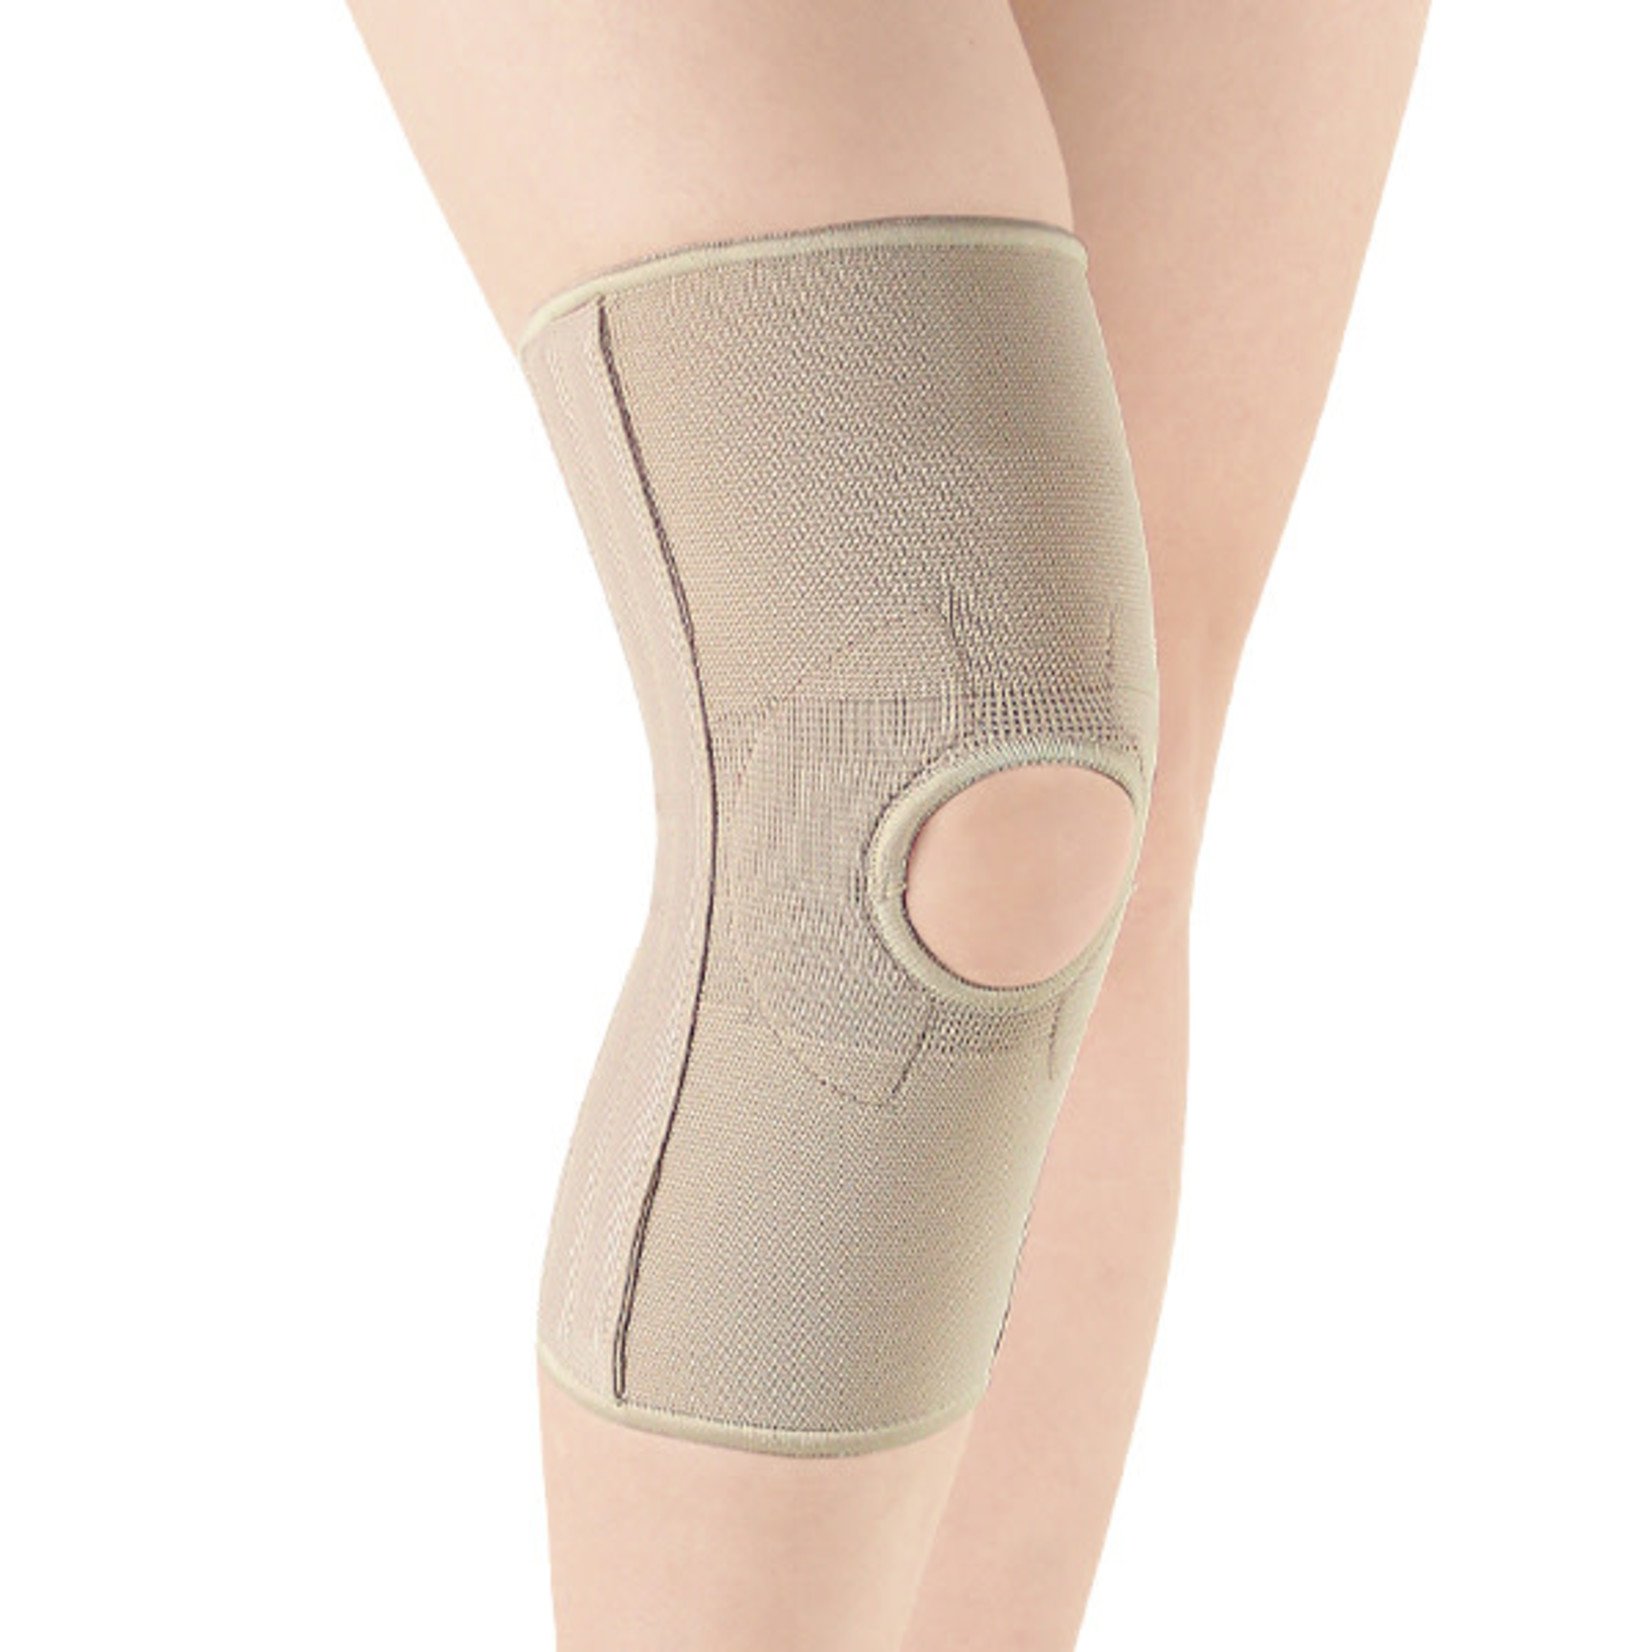 Orthoactive Spiral Elastic Knee Support - Large